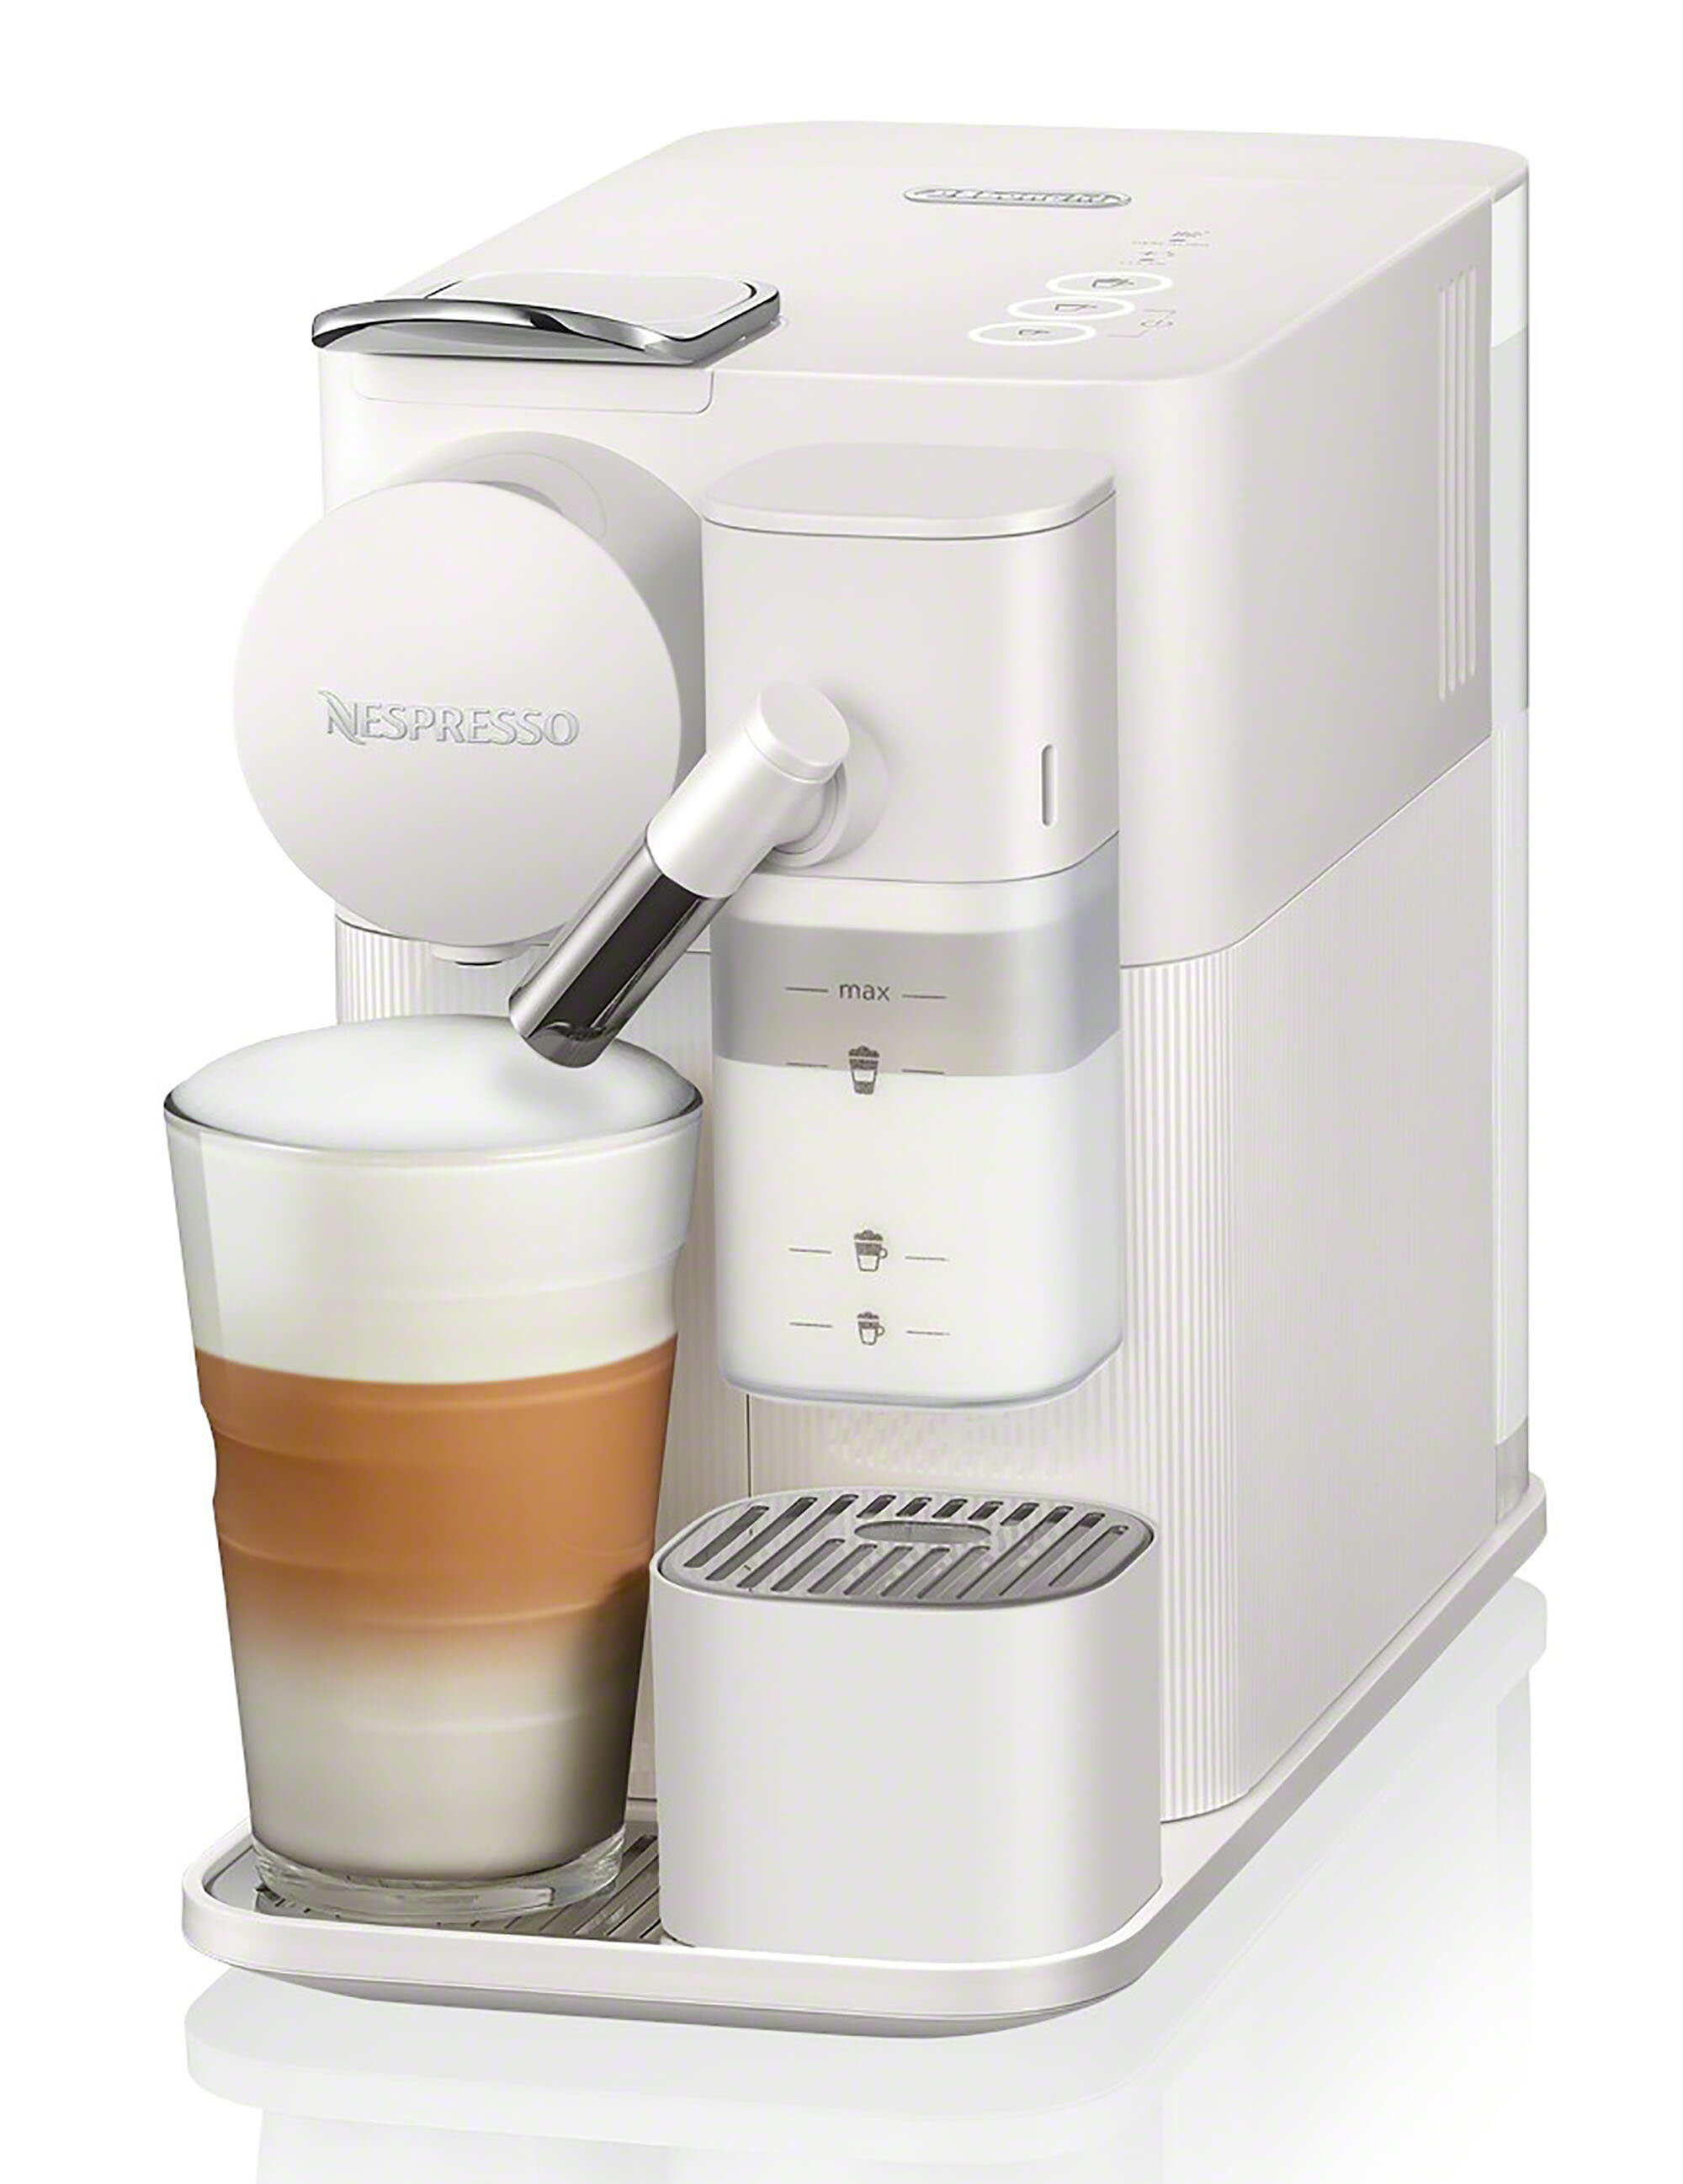 Nespresso Inissia Coffee Machine, White, over 100 sold, with Nespresso  Warranty